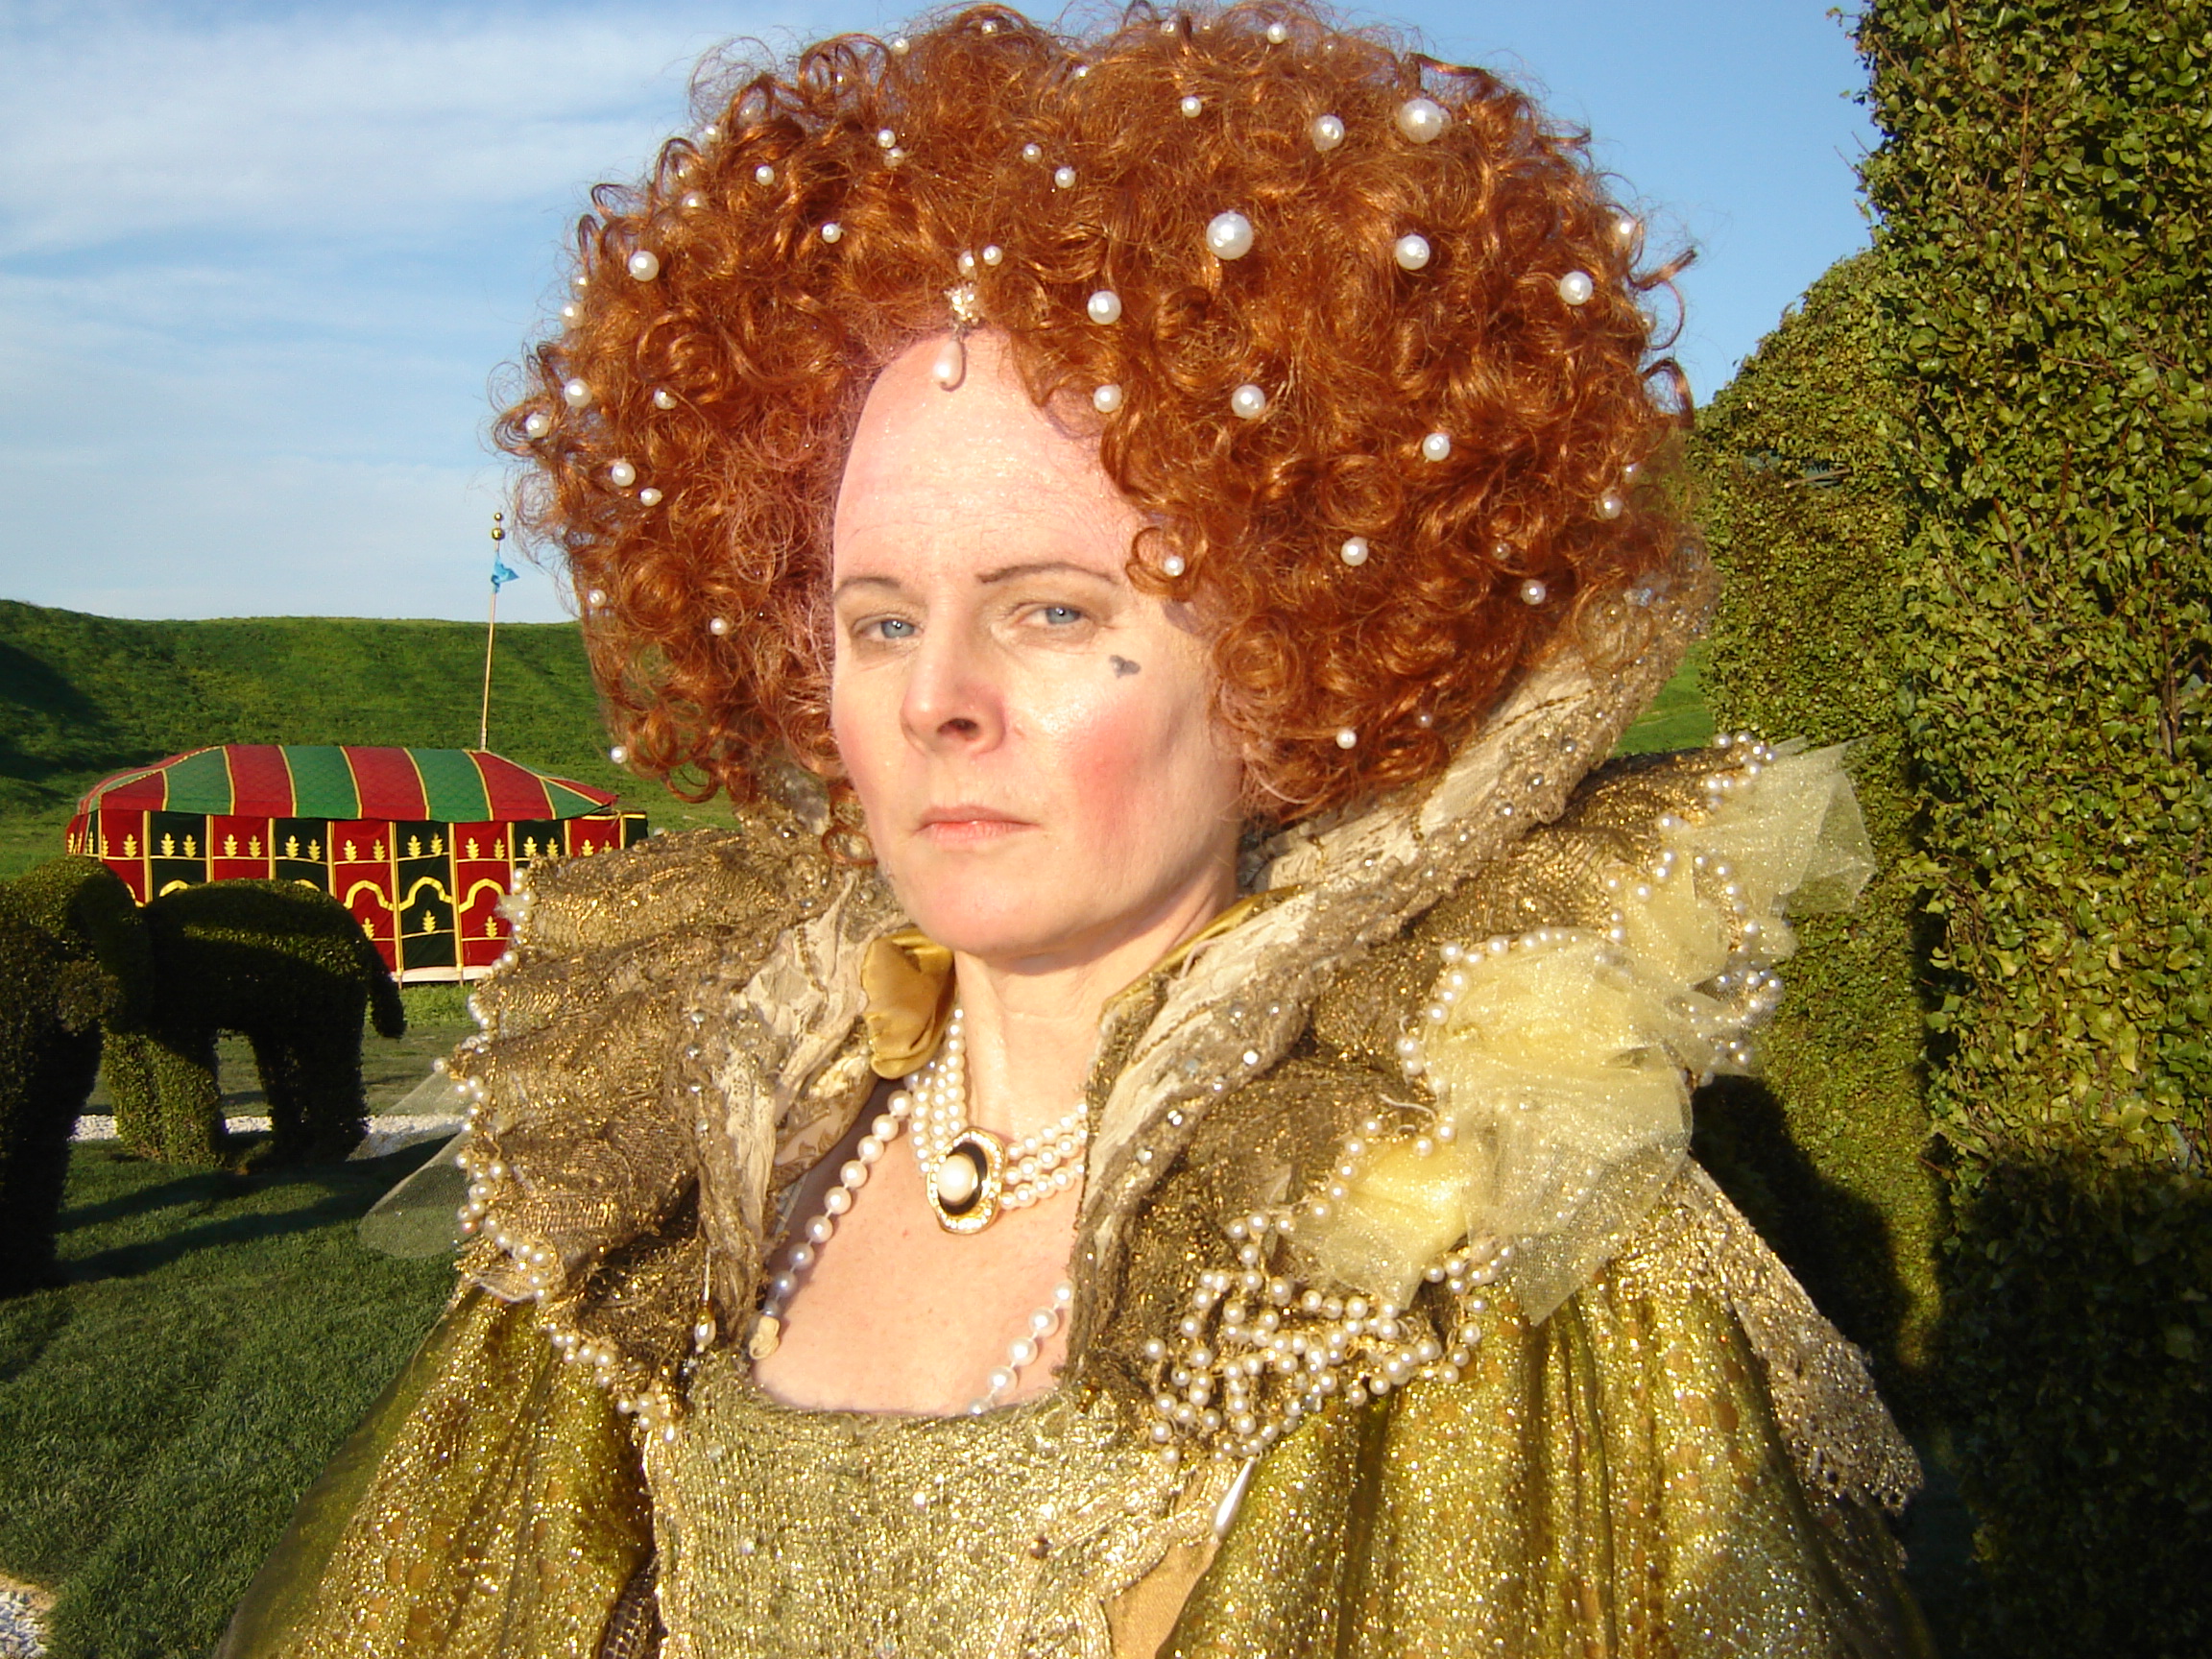 Frances Welter as Queen Elizabeth